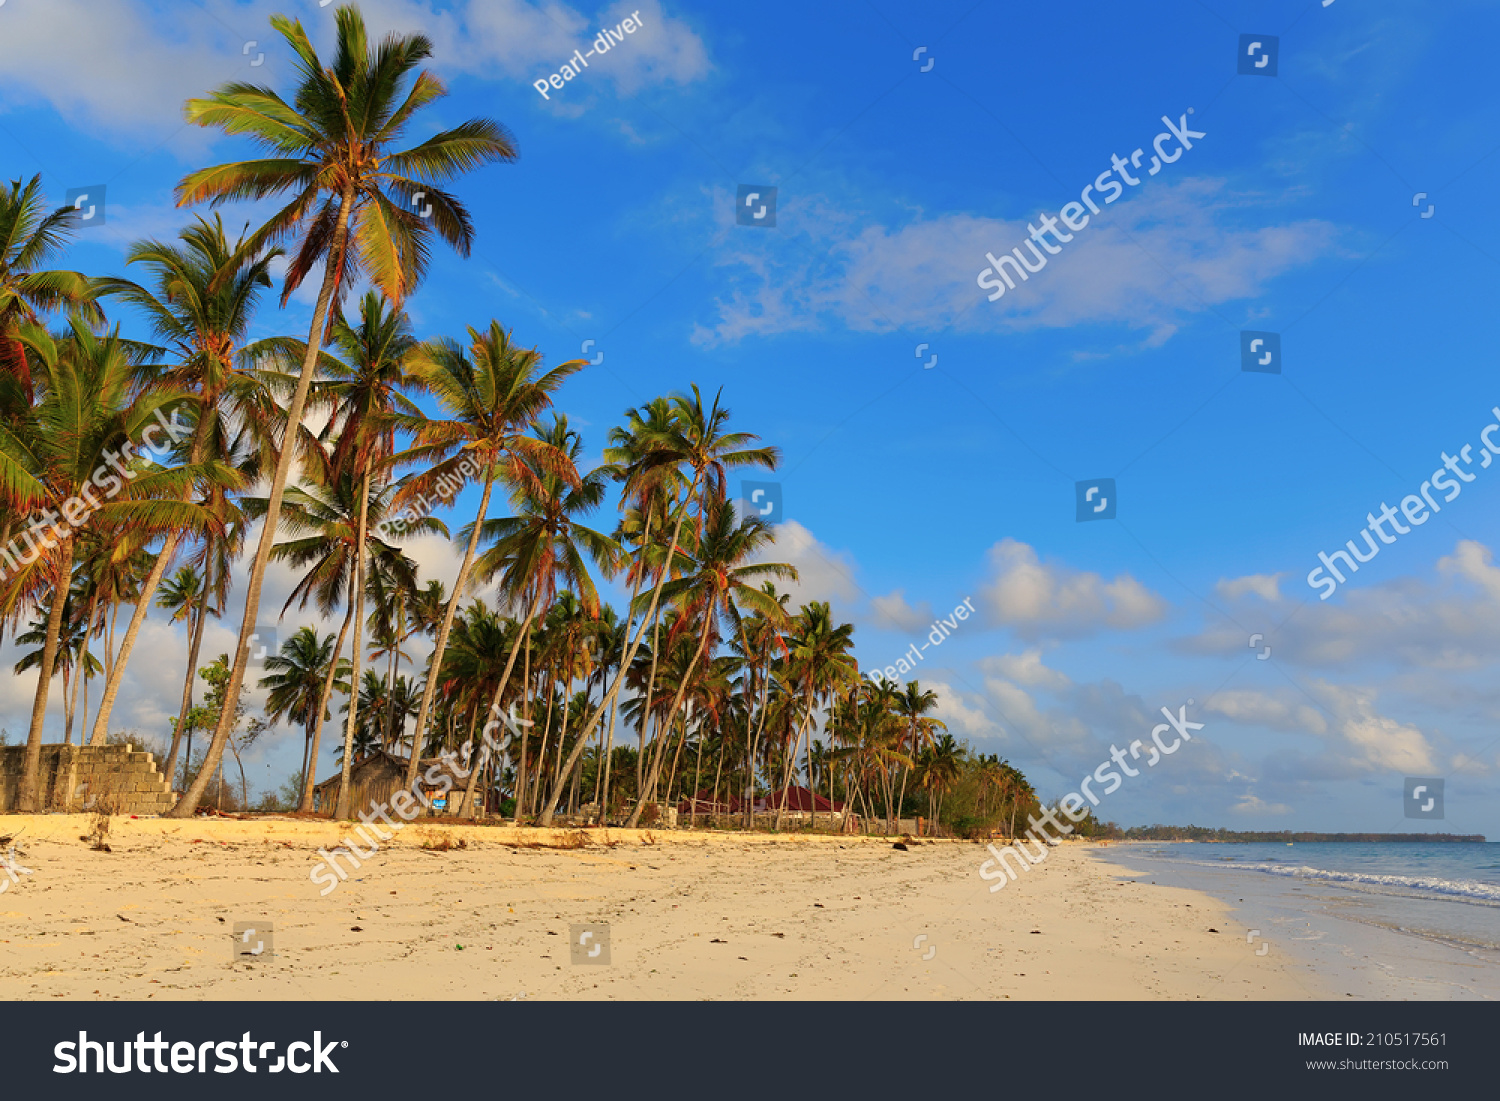 Palms over blue sky during sunny day, Zanzibar, Tanzania #210517561